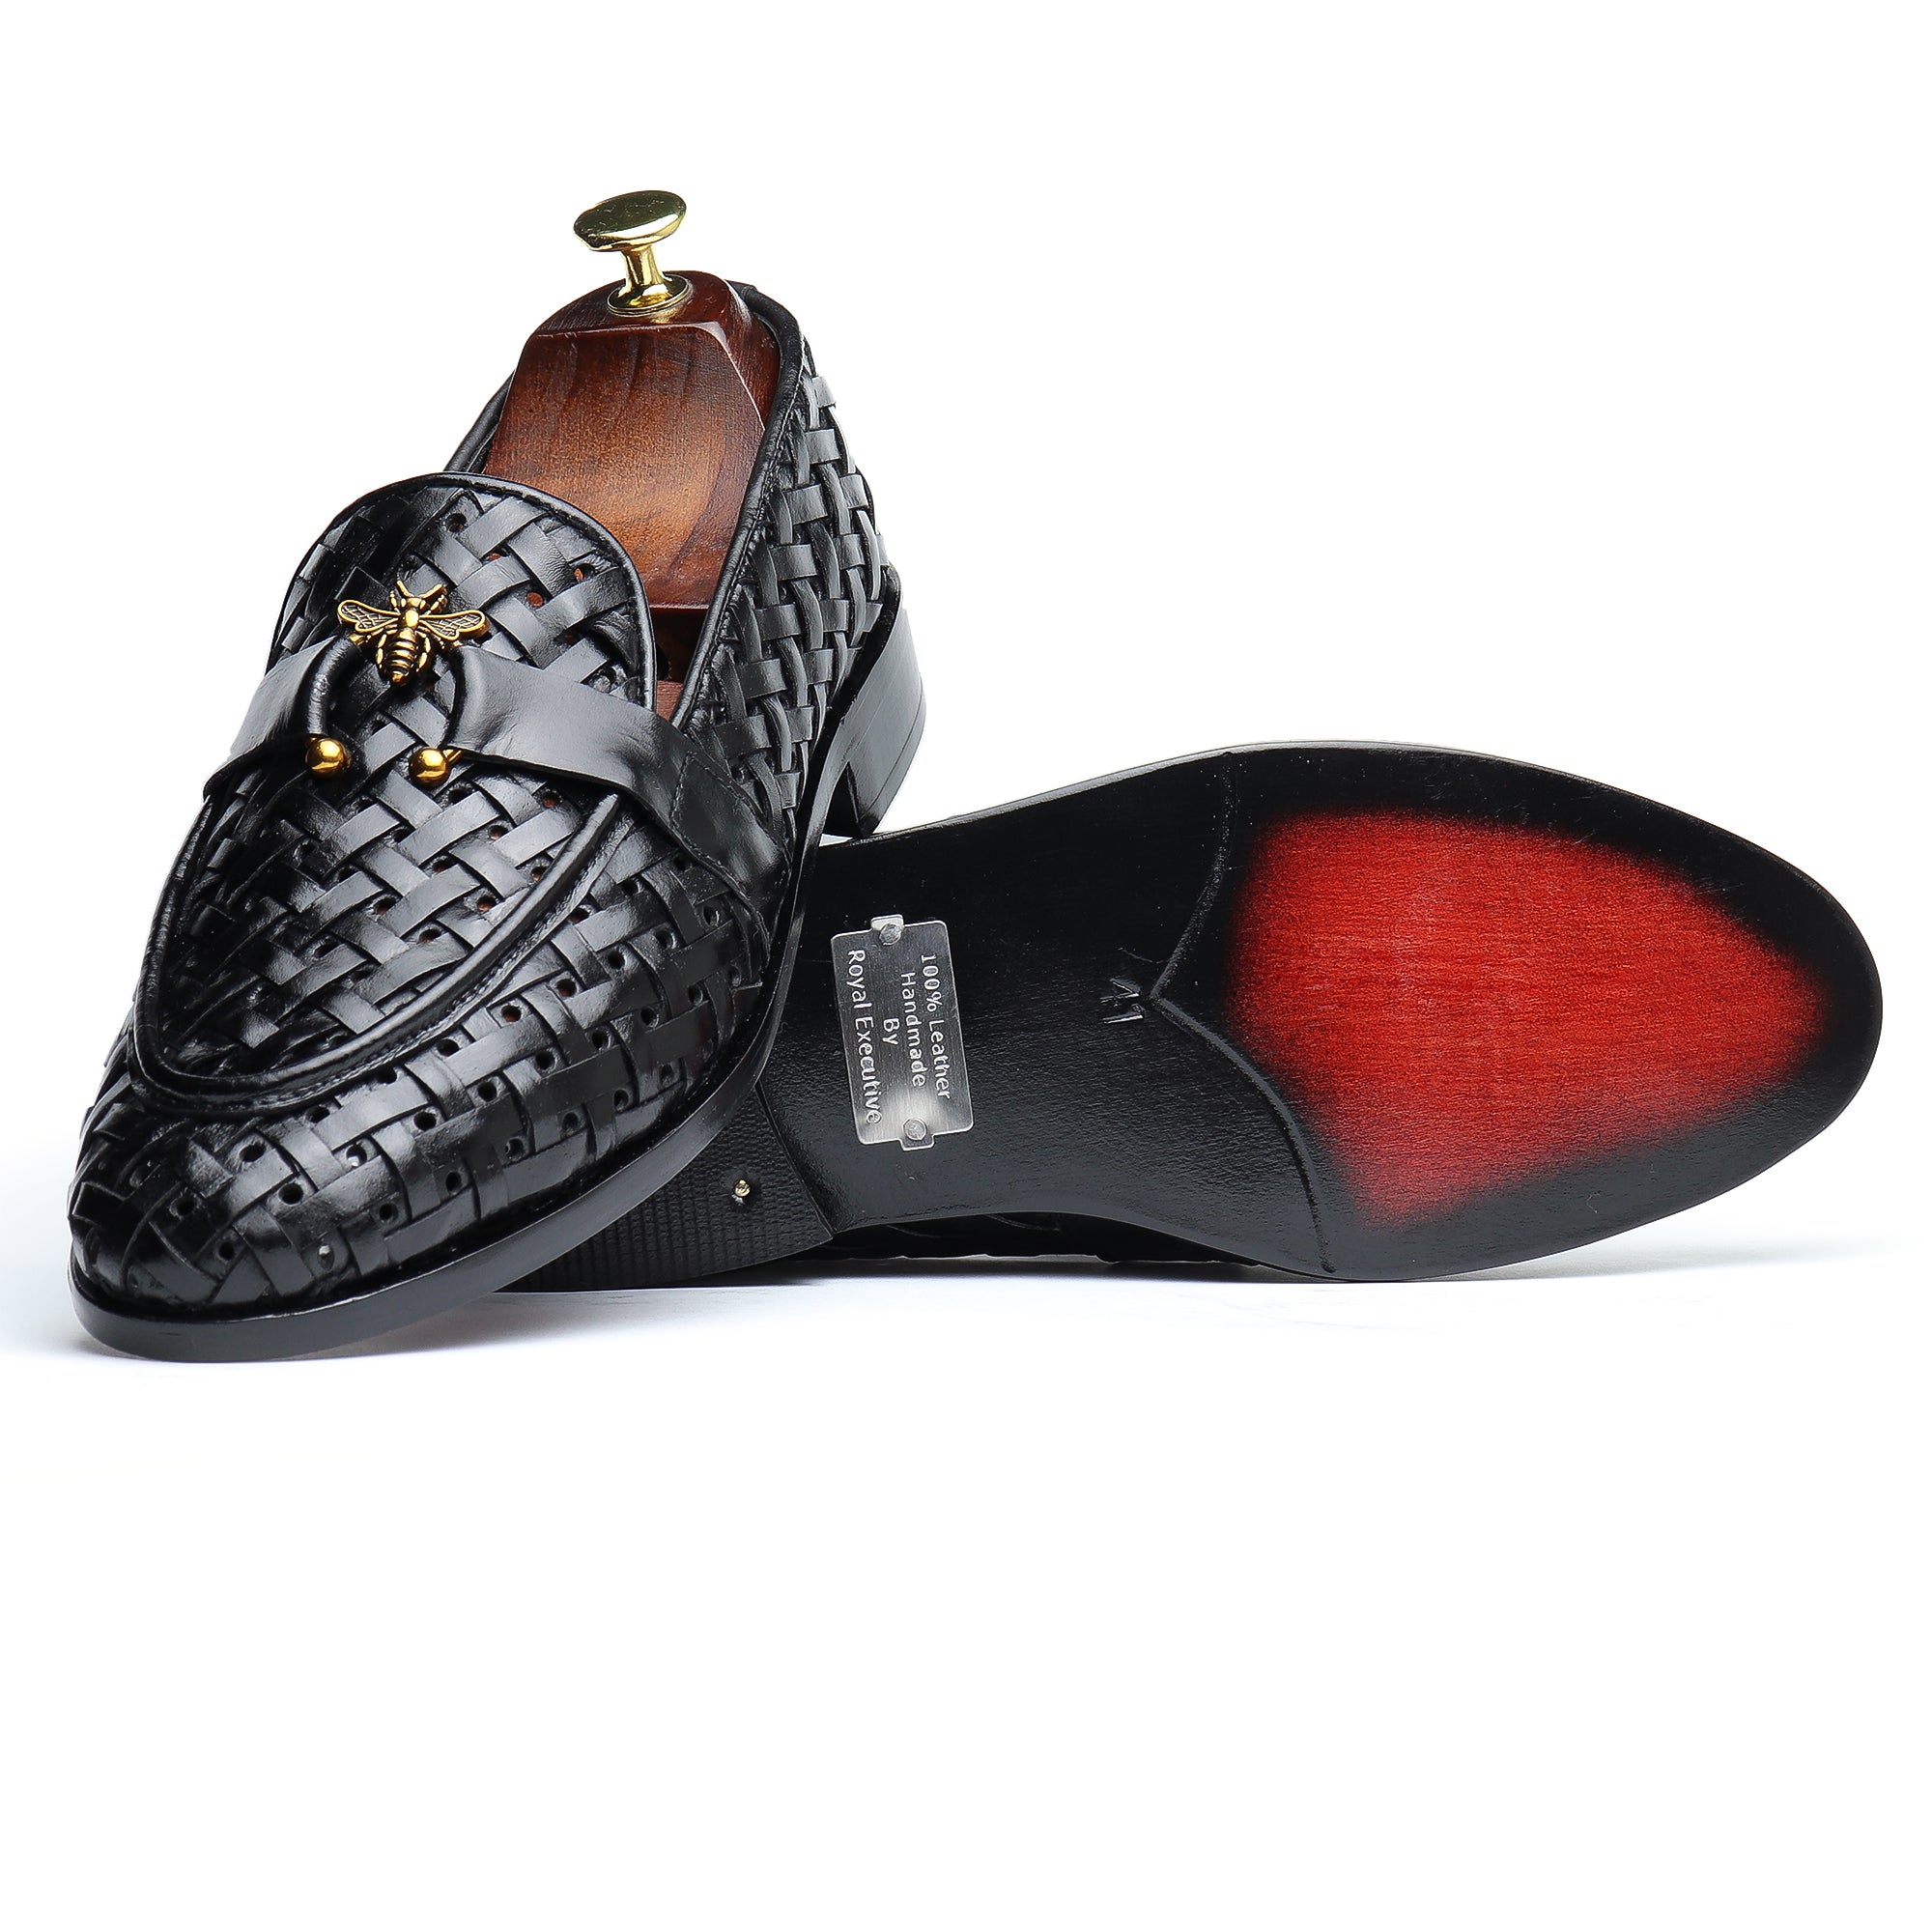 Royal Ring Knitting - Premium Shoes from royalstepshops - Just Rs.9000! Shop now at ROYAL STEP